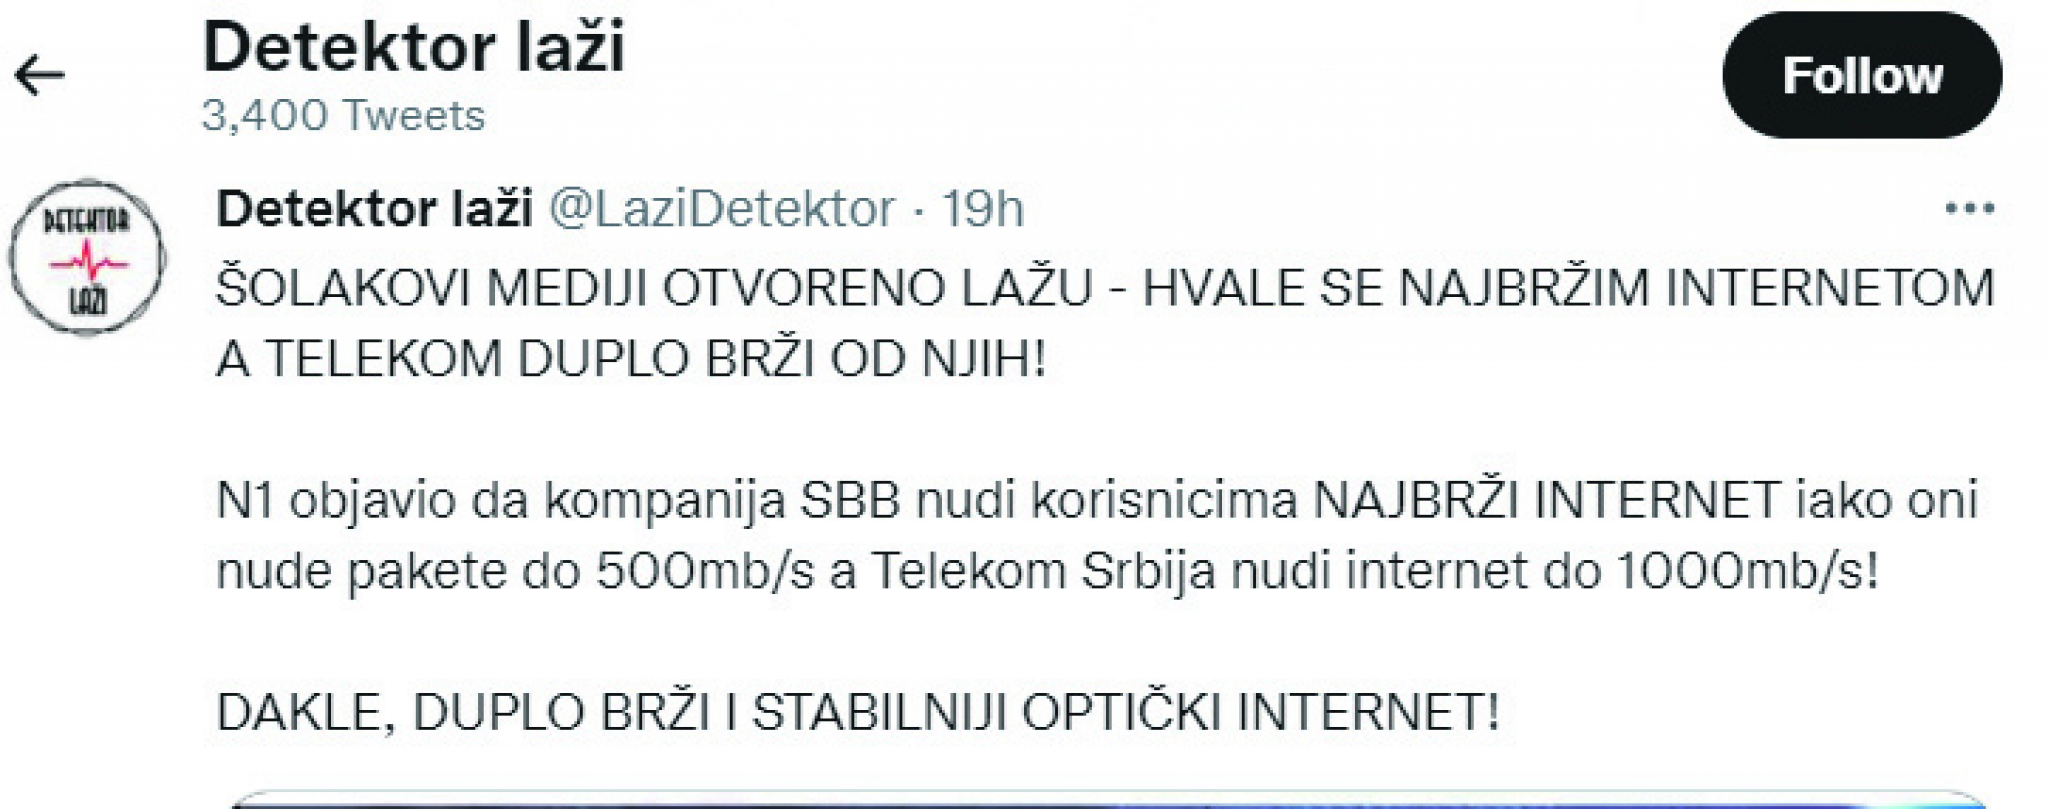 SAMI SEBE HVALE Šolakova kompanija i mediji dovode potrošače u zabludu: SBB najbrži,  al' zamalo!